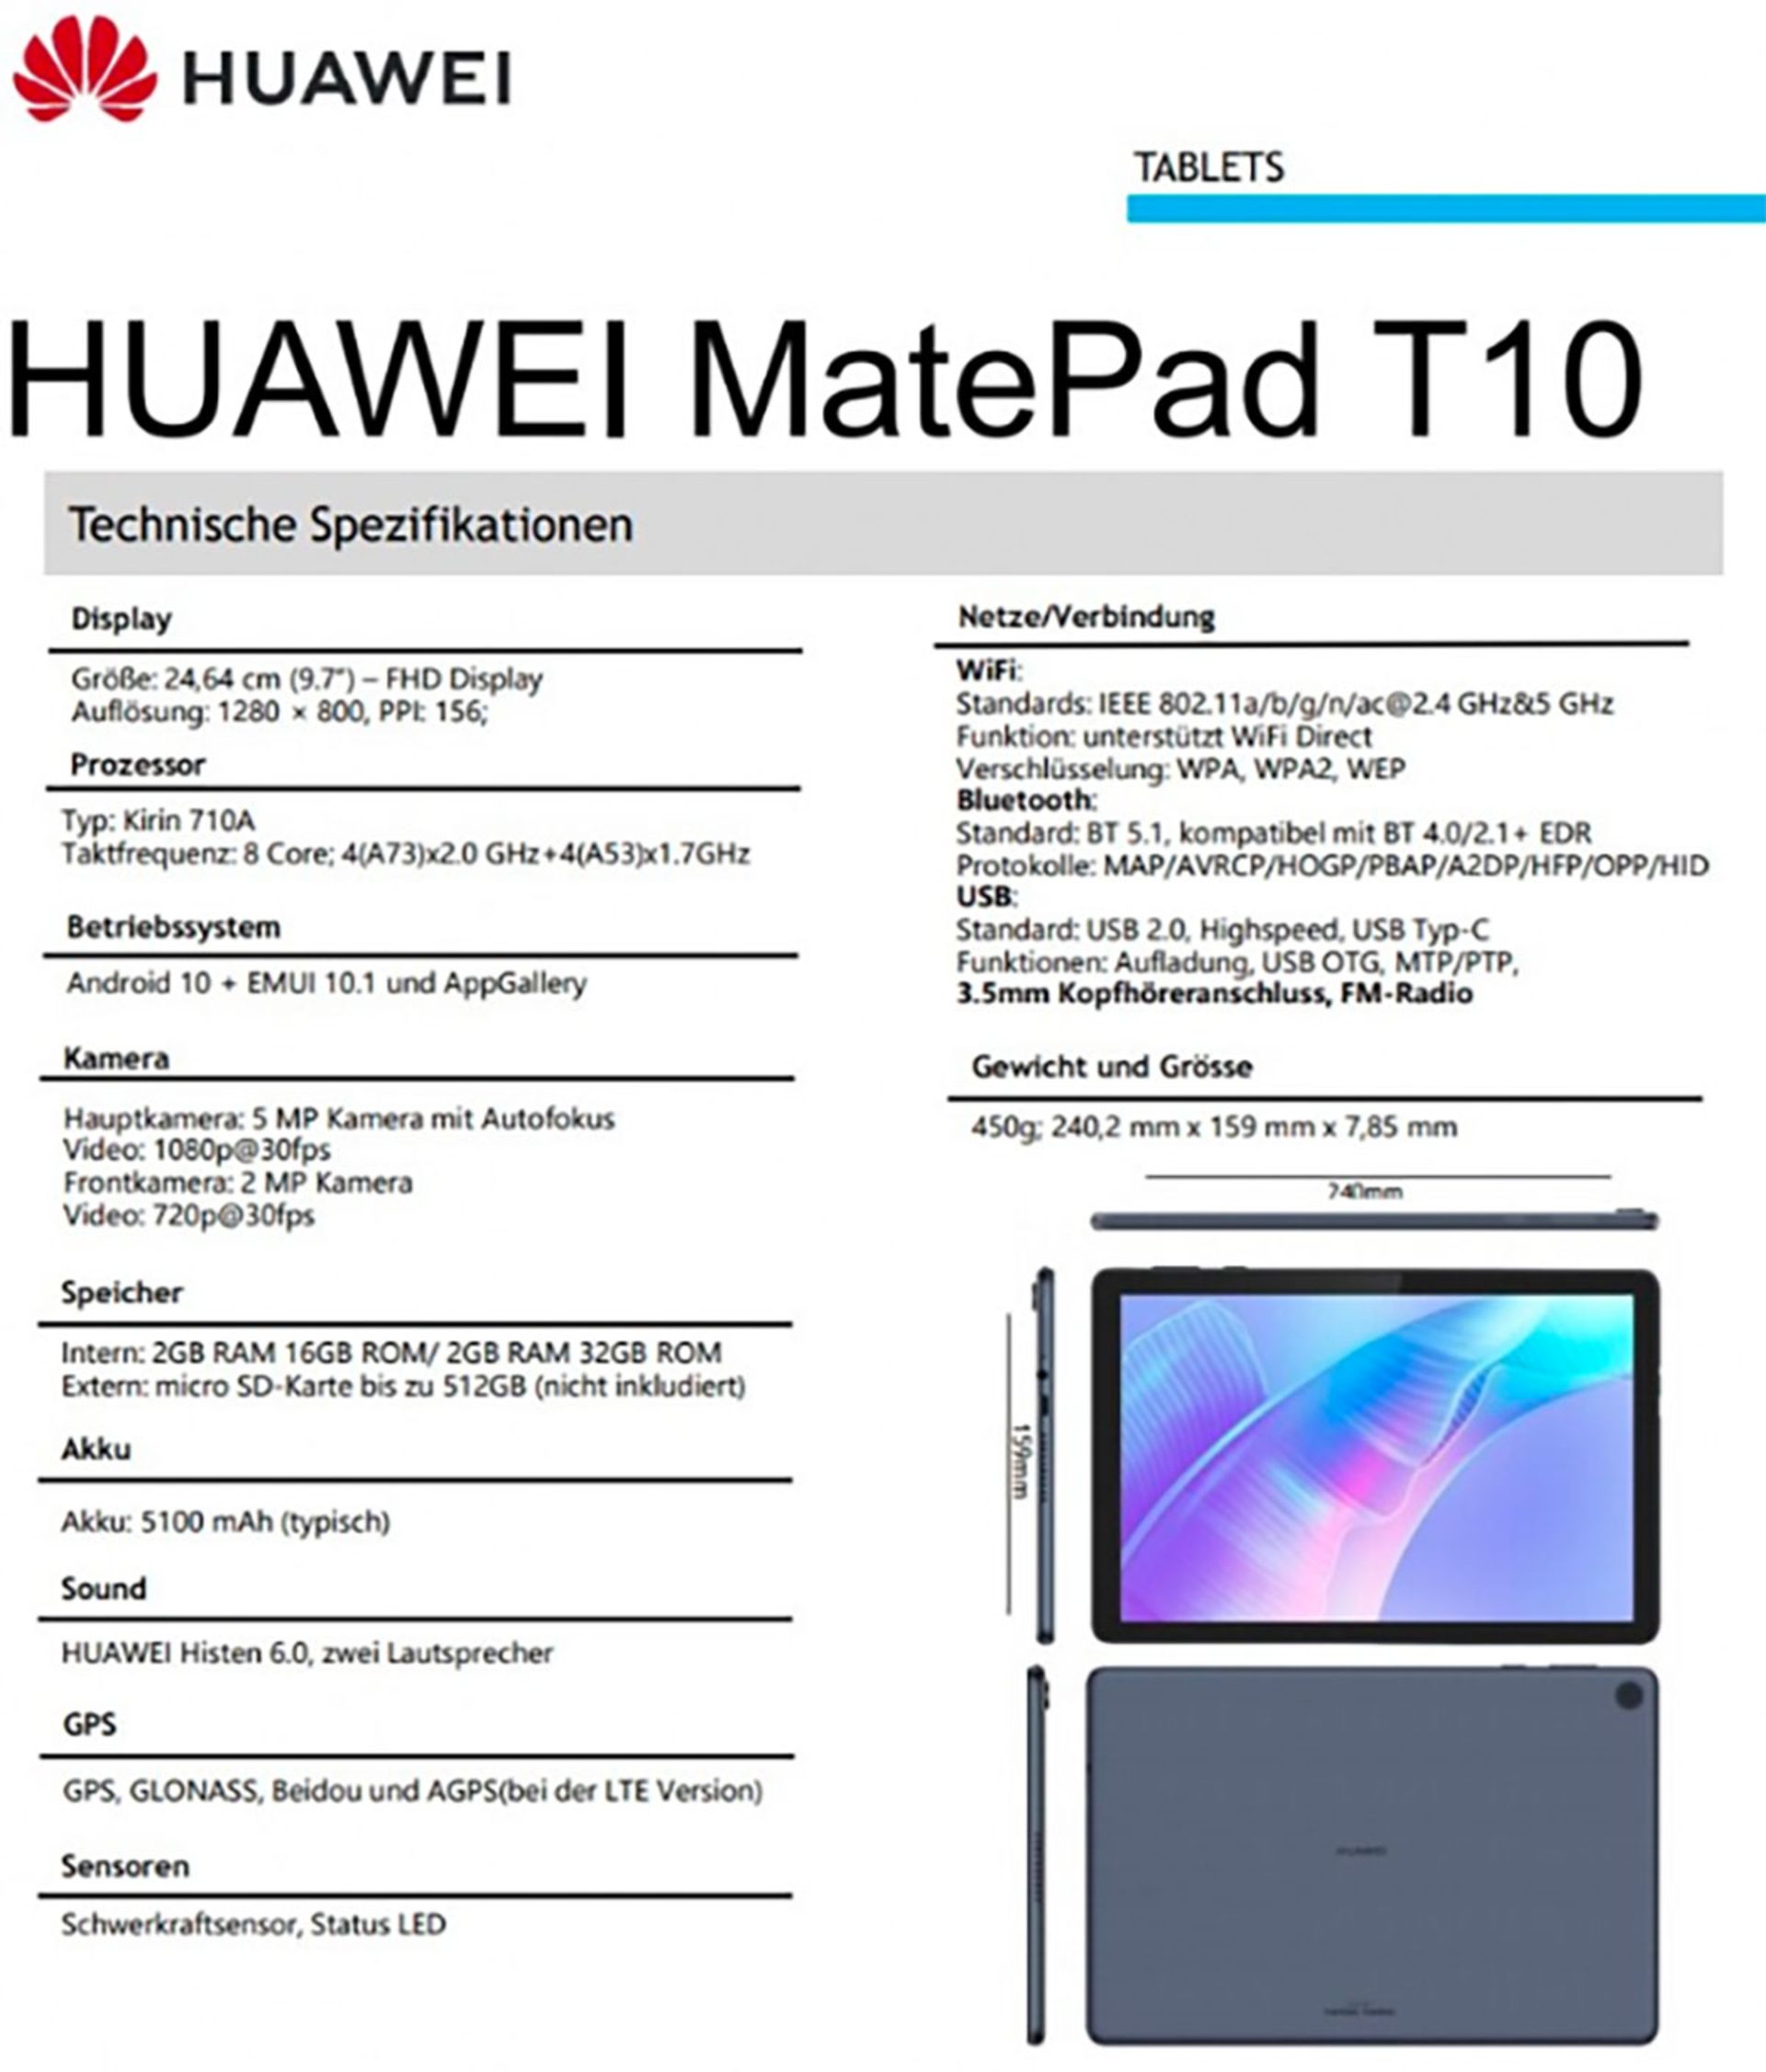 مشخصات فنی هواوی MatePad T10